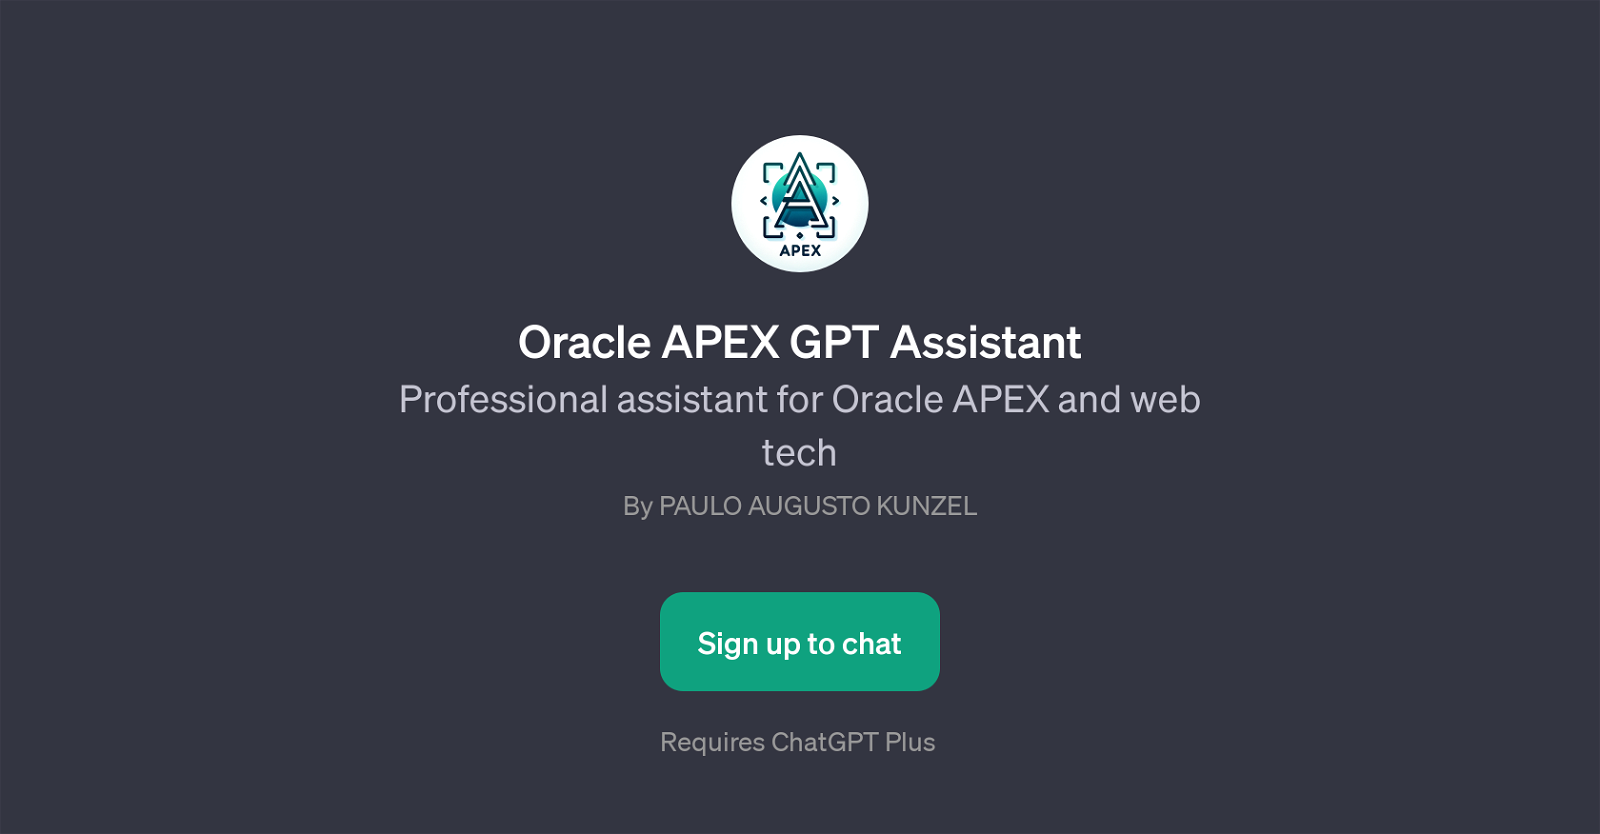 Oracle APEX GPT Assistant website